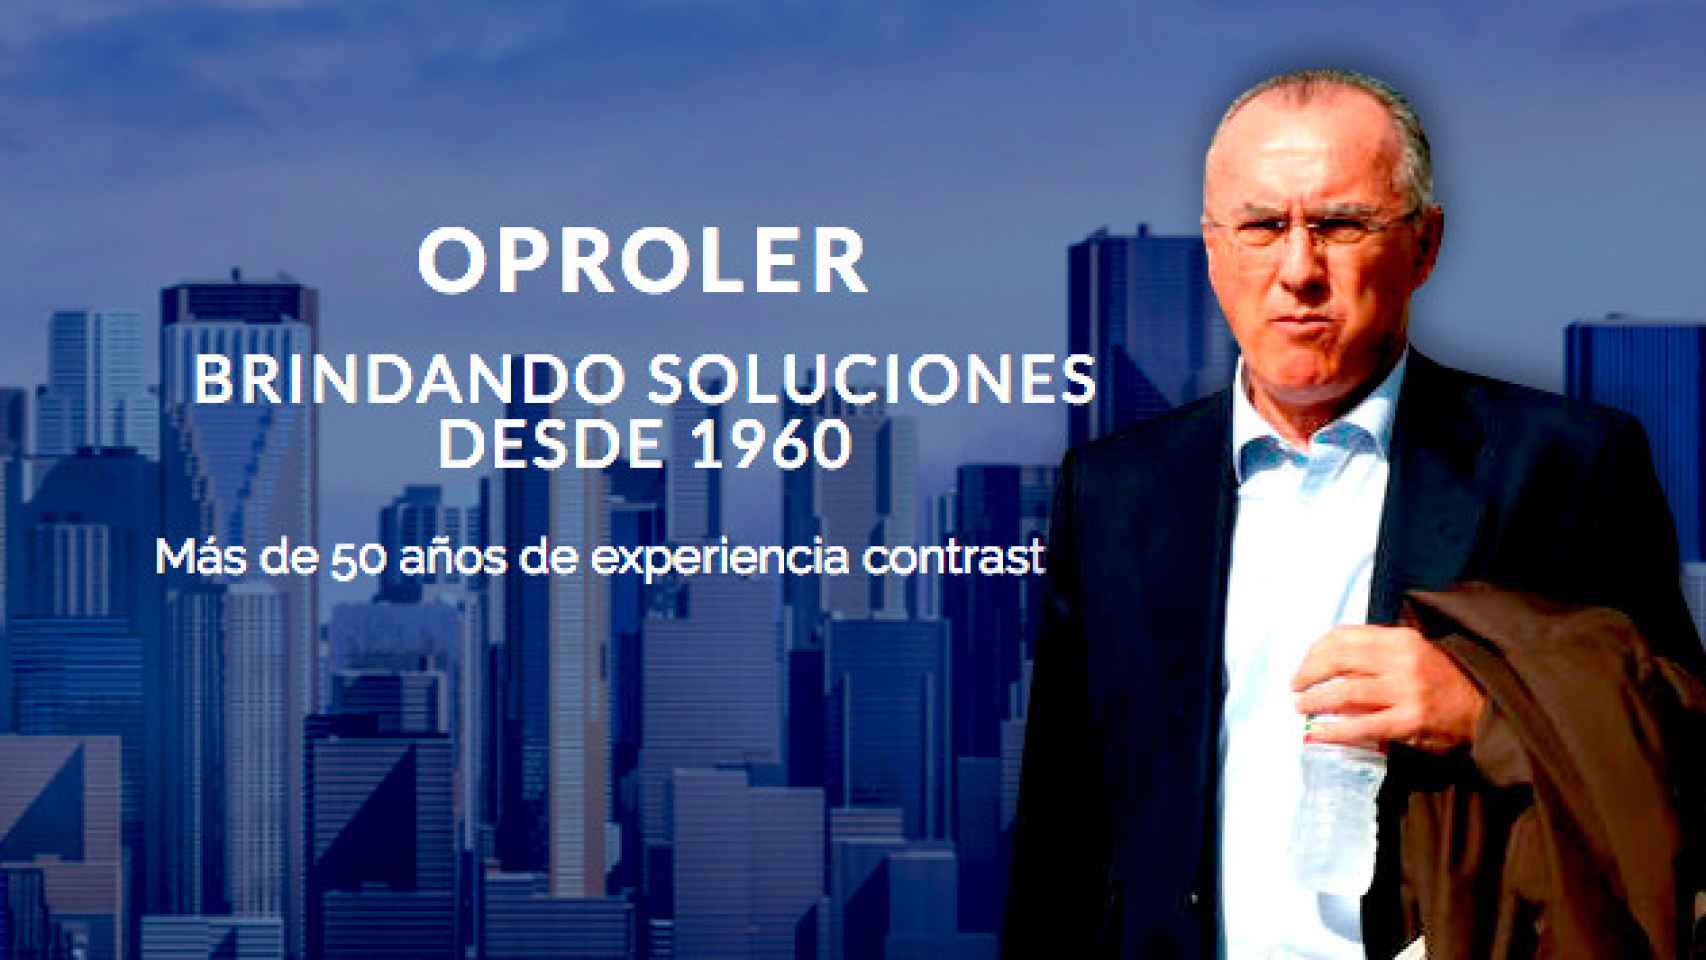 Oproler, la empresa que dirigía Josep Manuel Bassols / CG